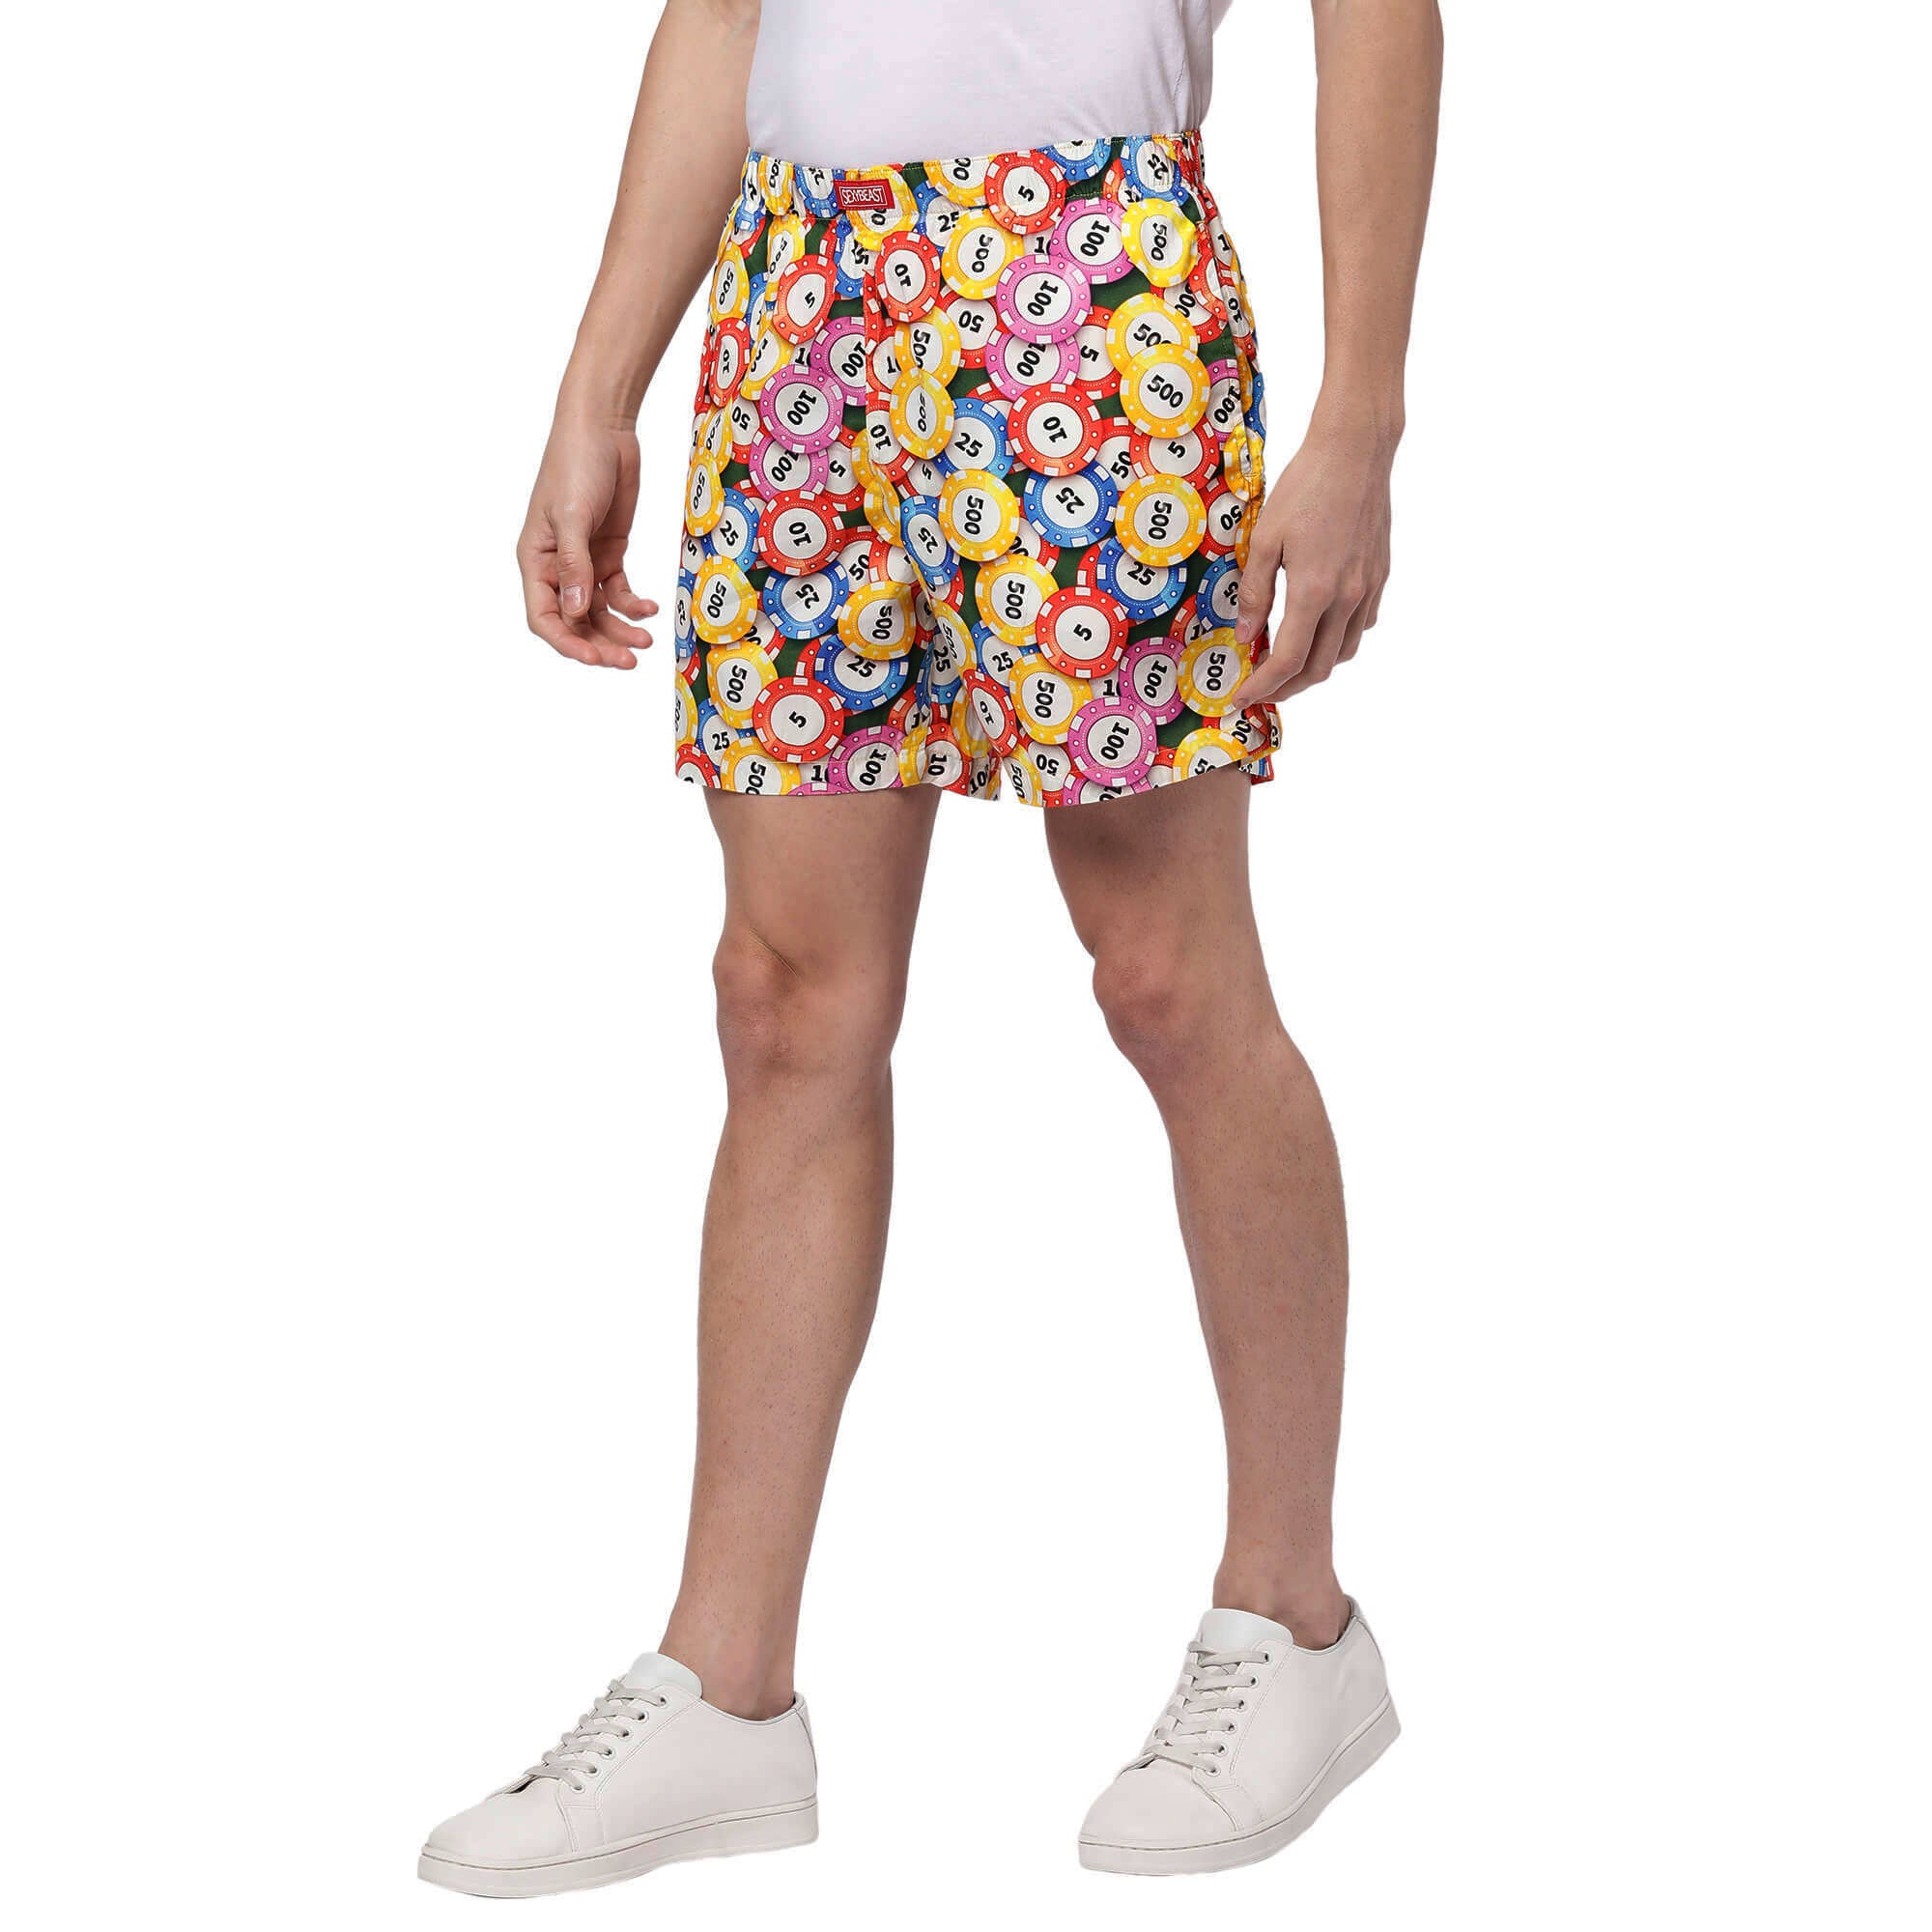 Funky Shorts for Men